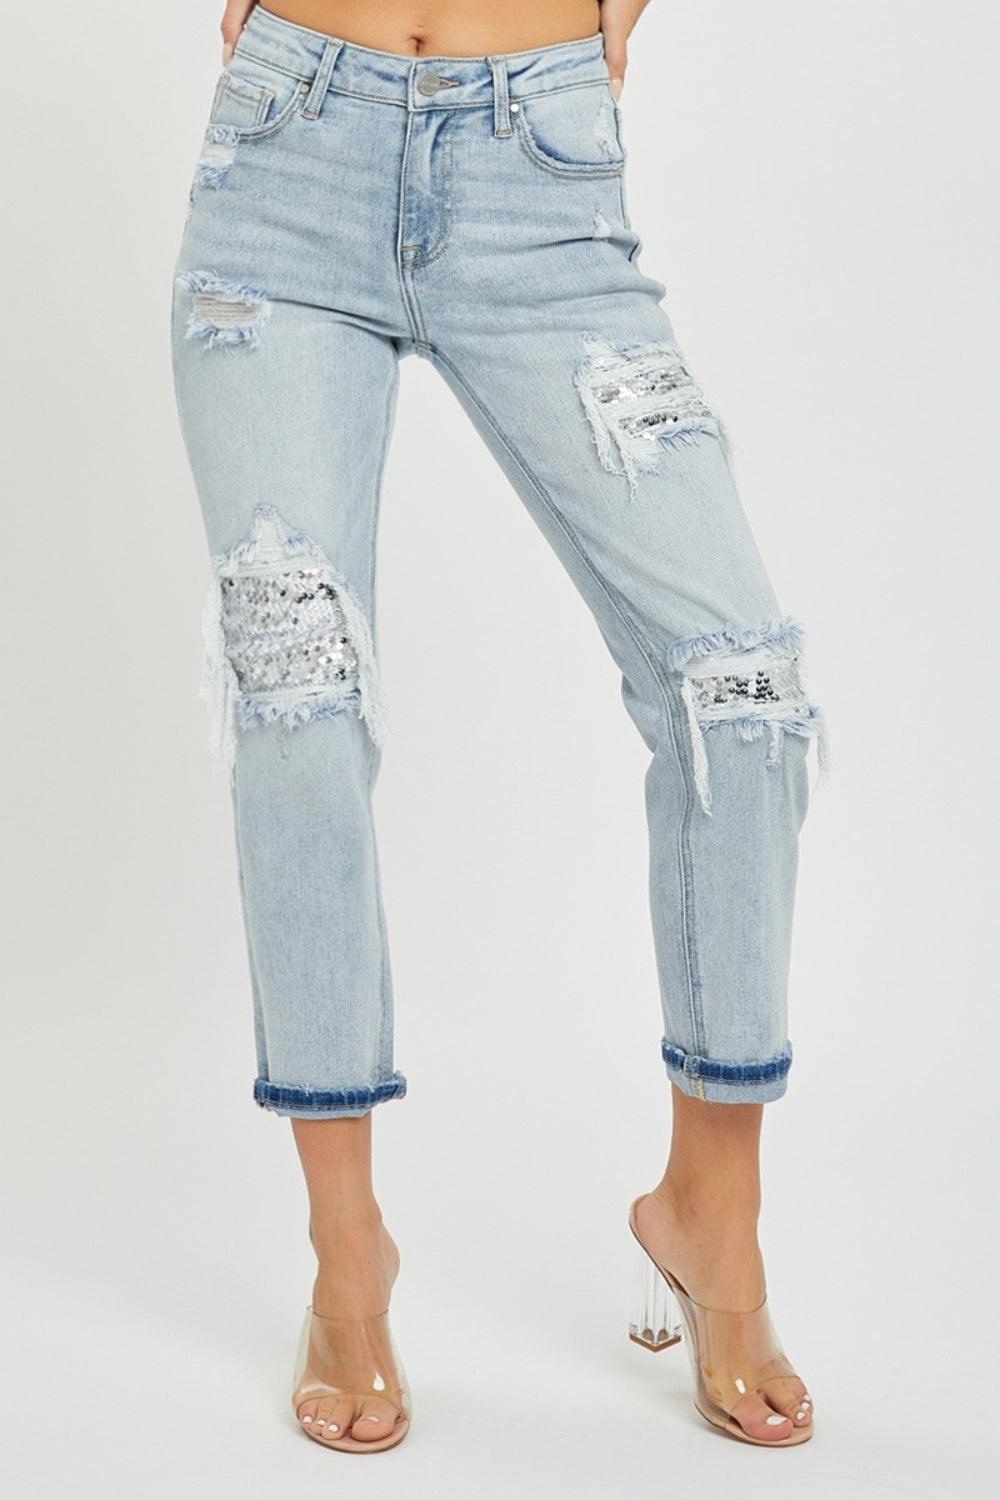 Bona Fide Fashion - Mid-Rise Sequin Patched Jeans - Women Fashion - Bona Fide Fashion